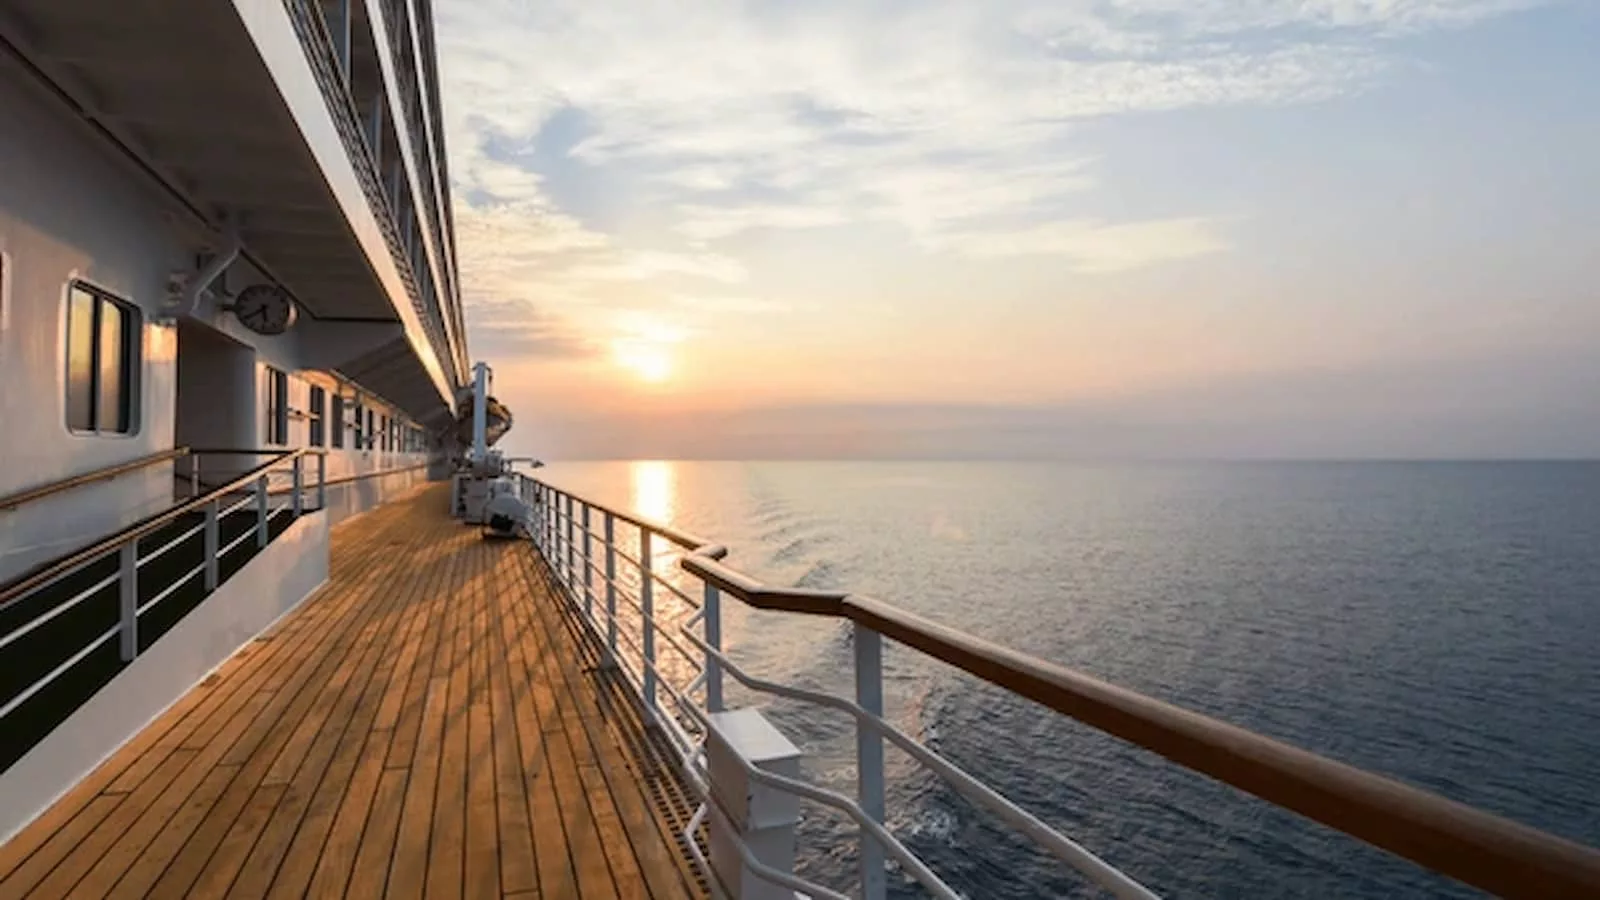 7 Best Hidden spots on Cruise Ships for a Peaceful Escape, Best Hidden spots on Cruise Ships